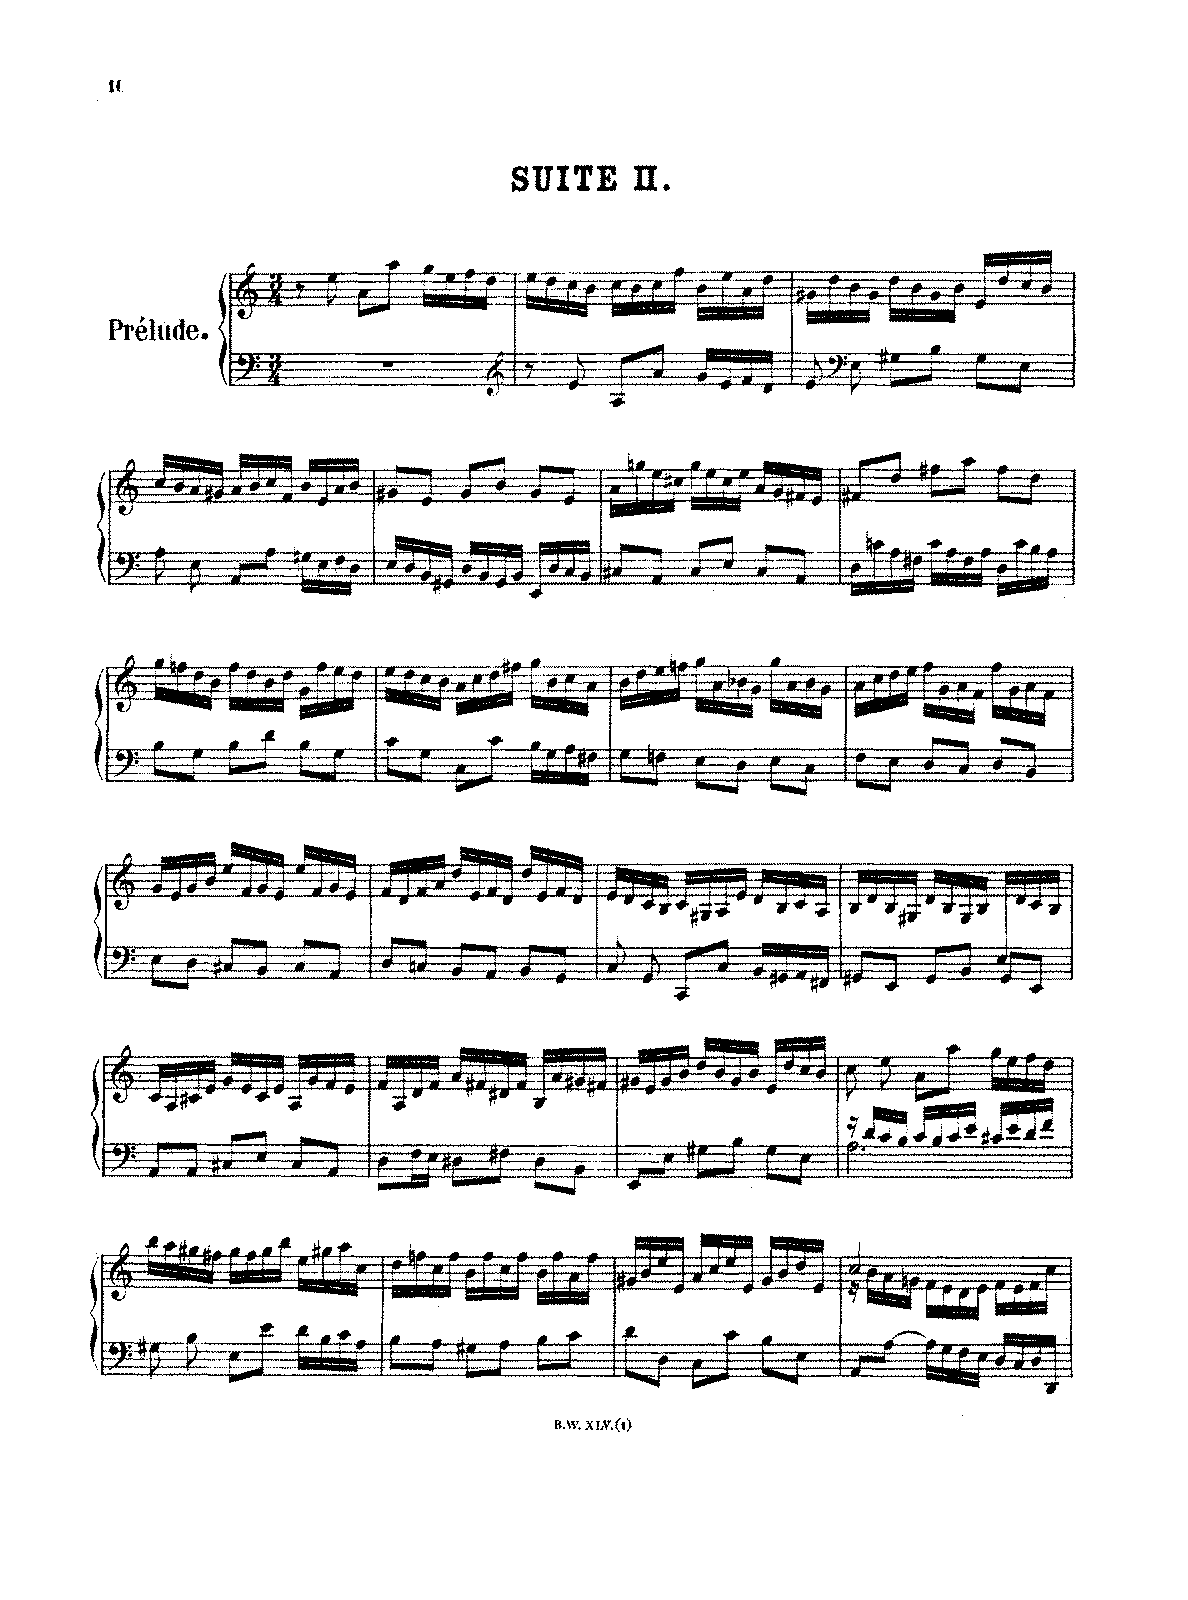 English Suite No.2 in A minor, BWV 807 (Bach, Johann Sebastian) - IMSLP ...